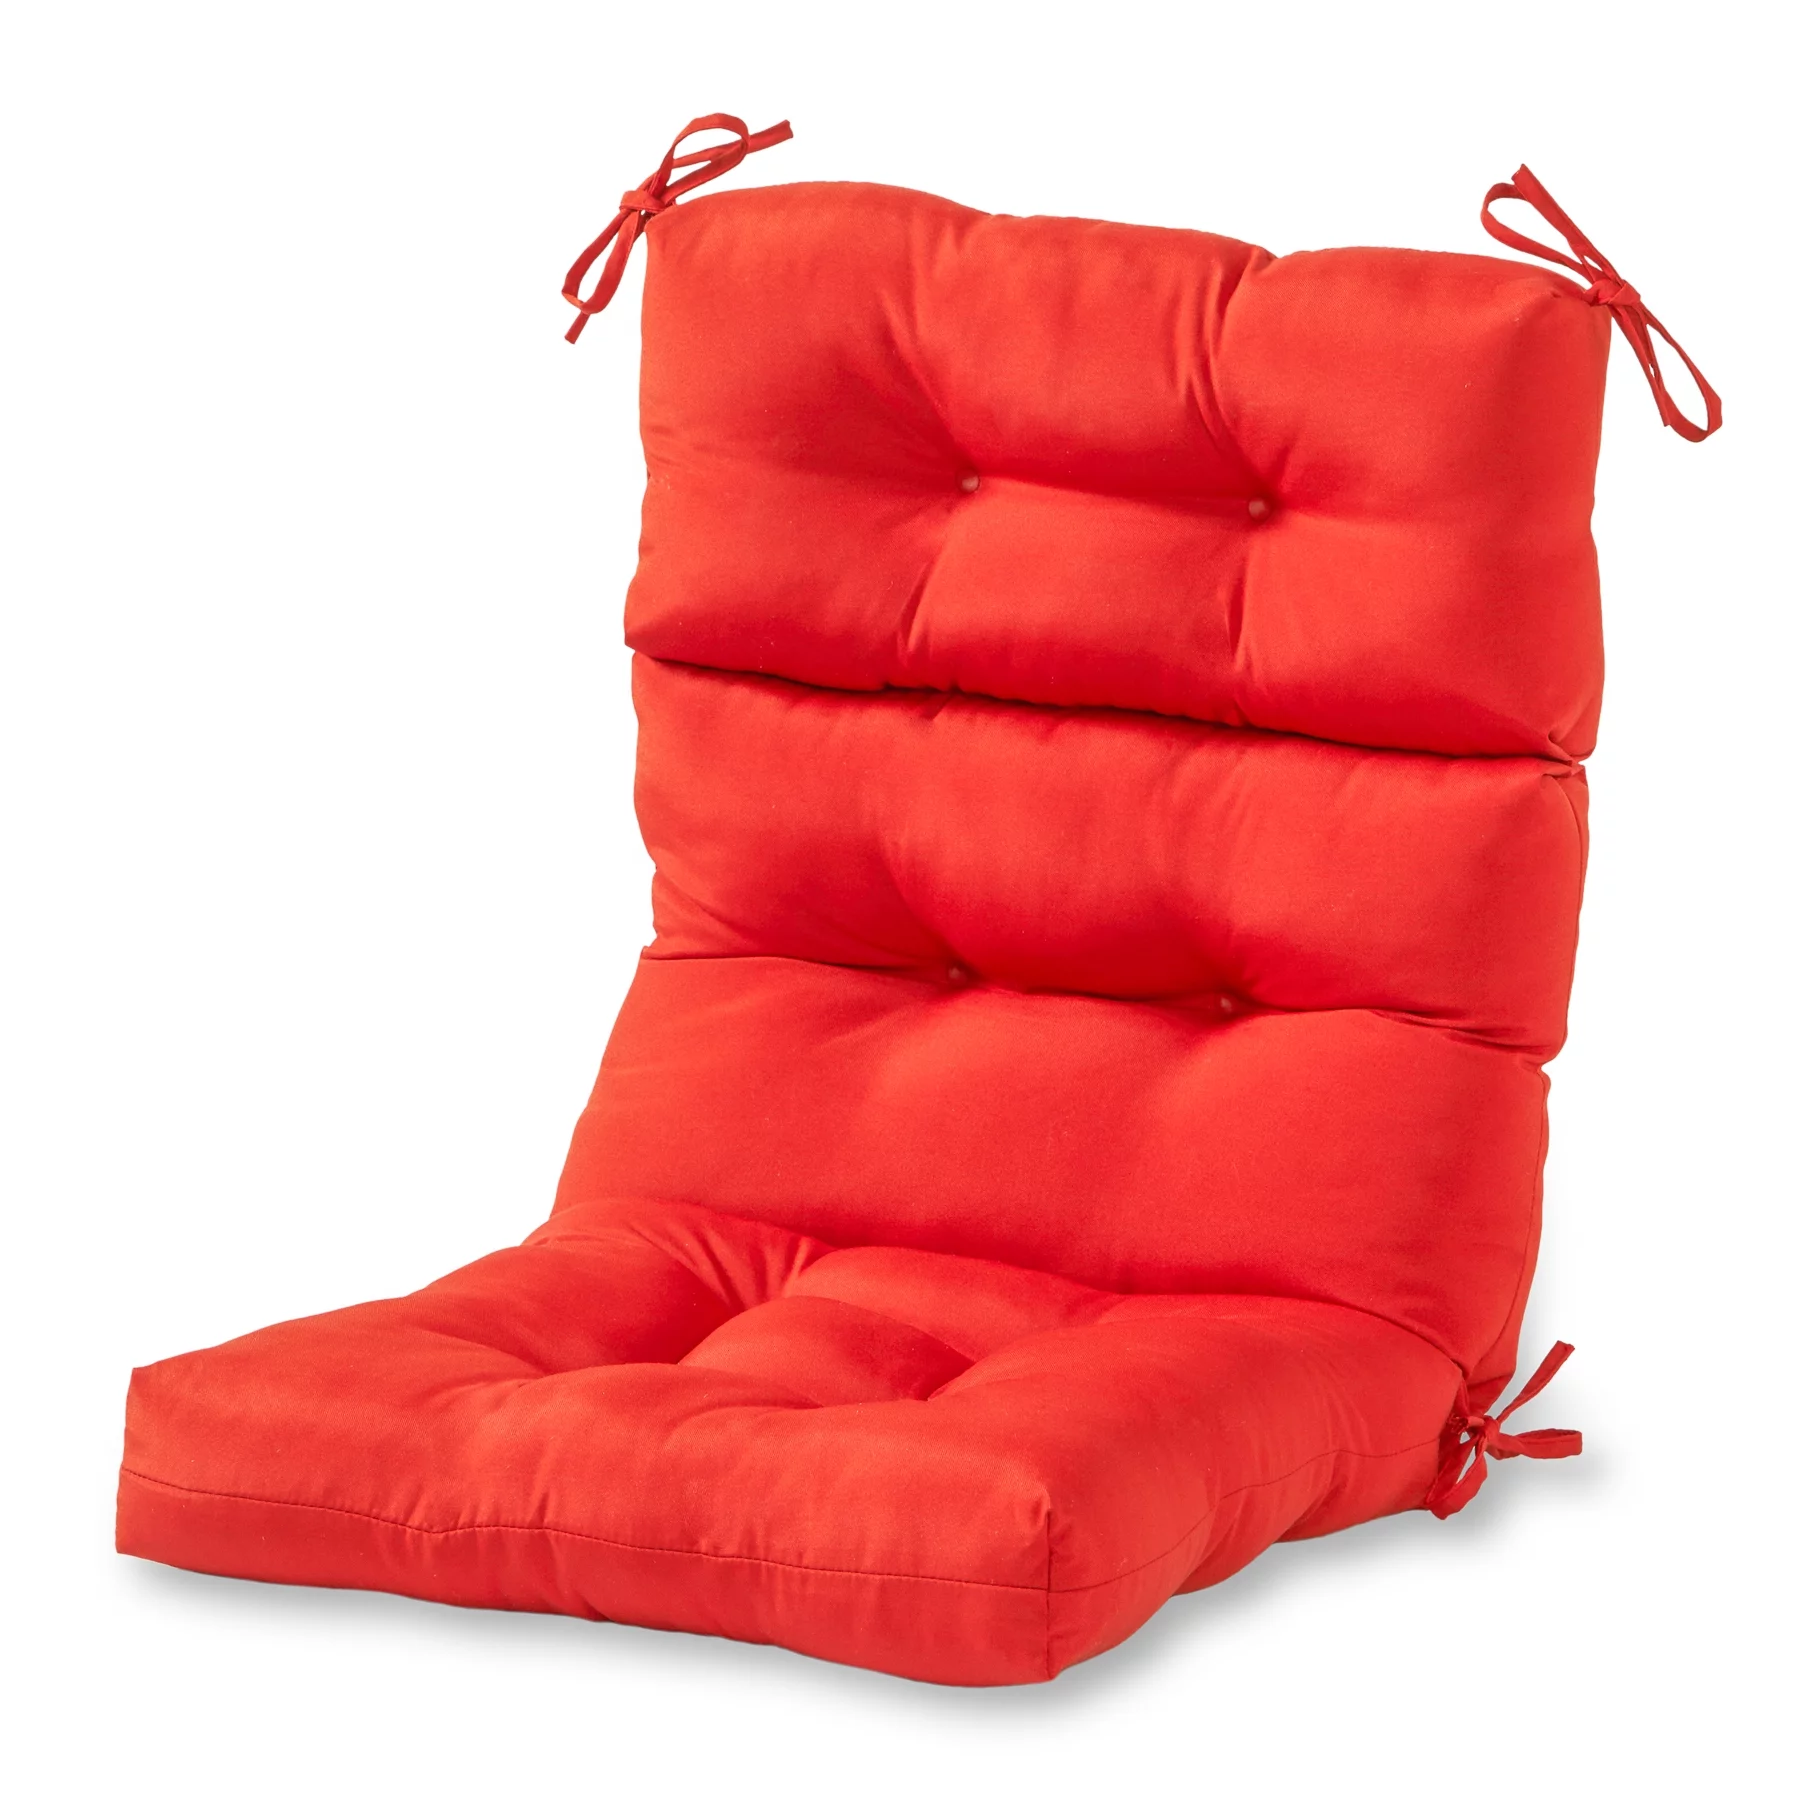 Greendale Home Fashions Salsa 44 x 22 in. Outdoor High Back Chair Cushion